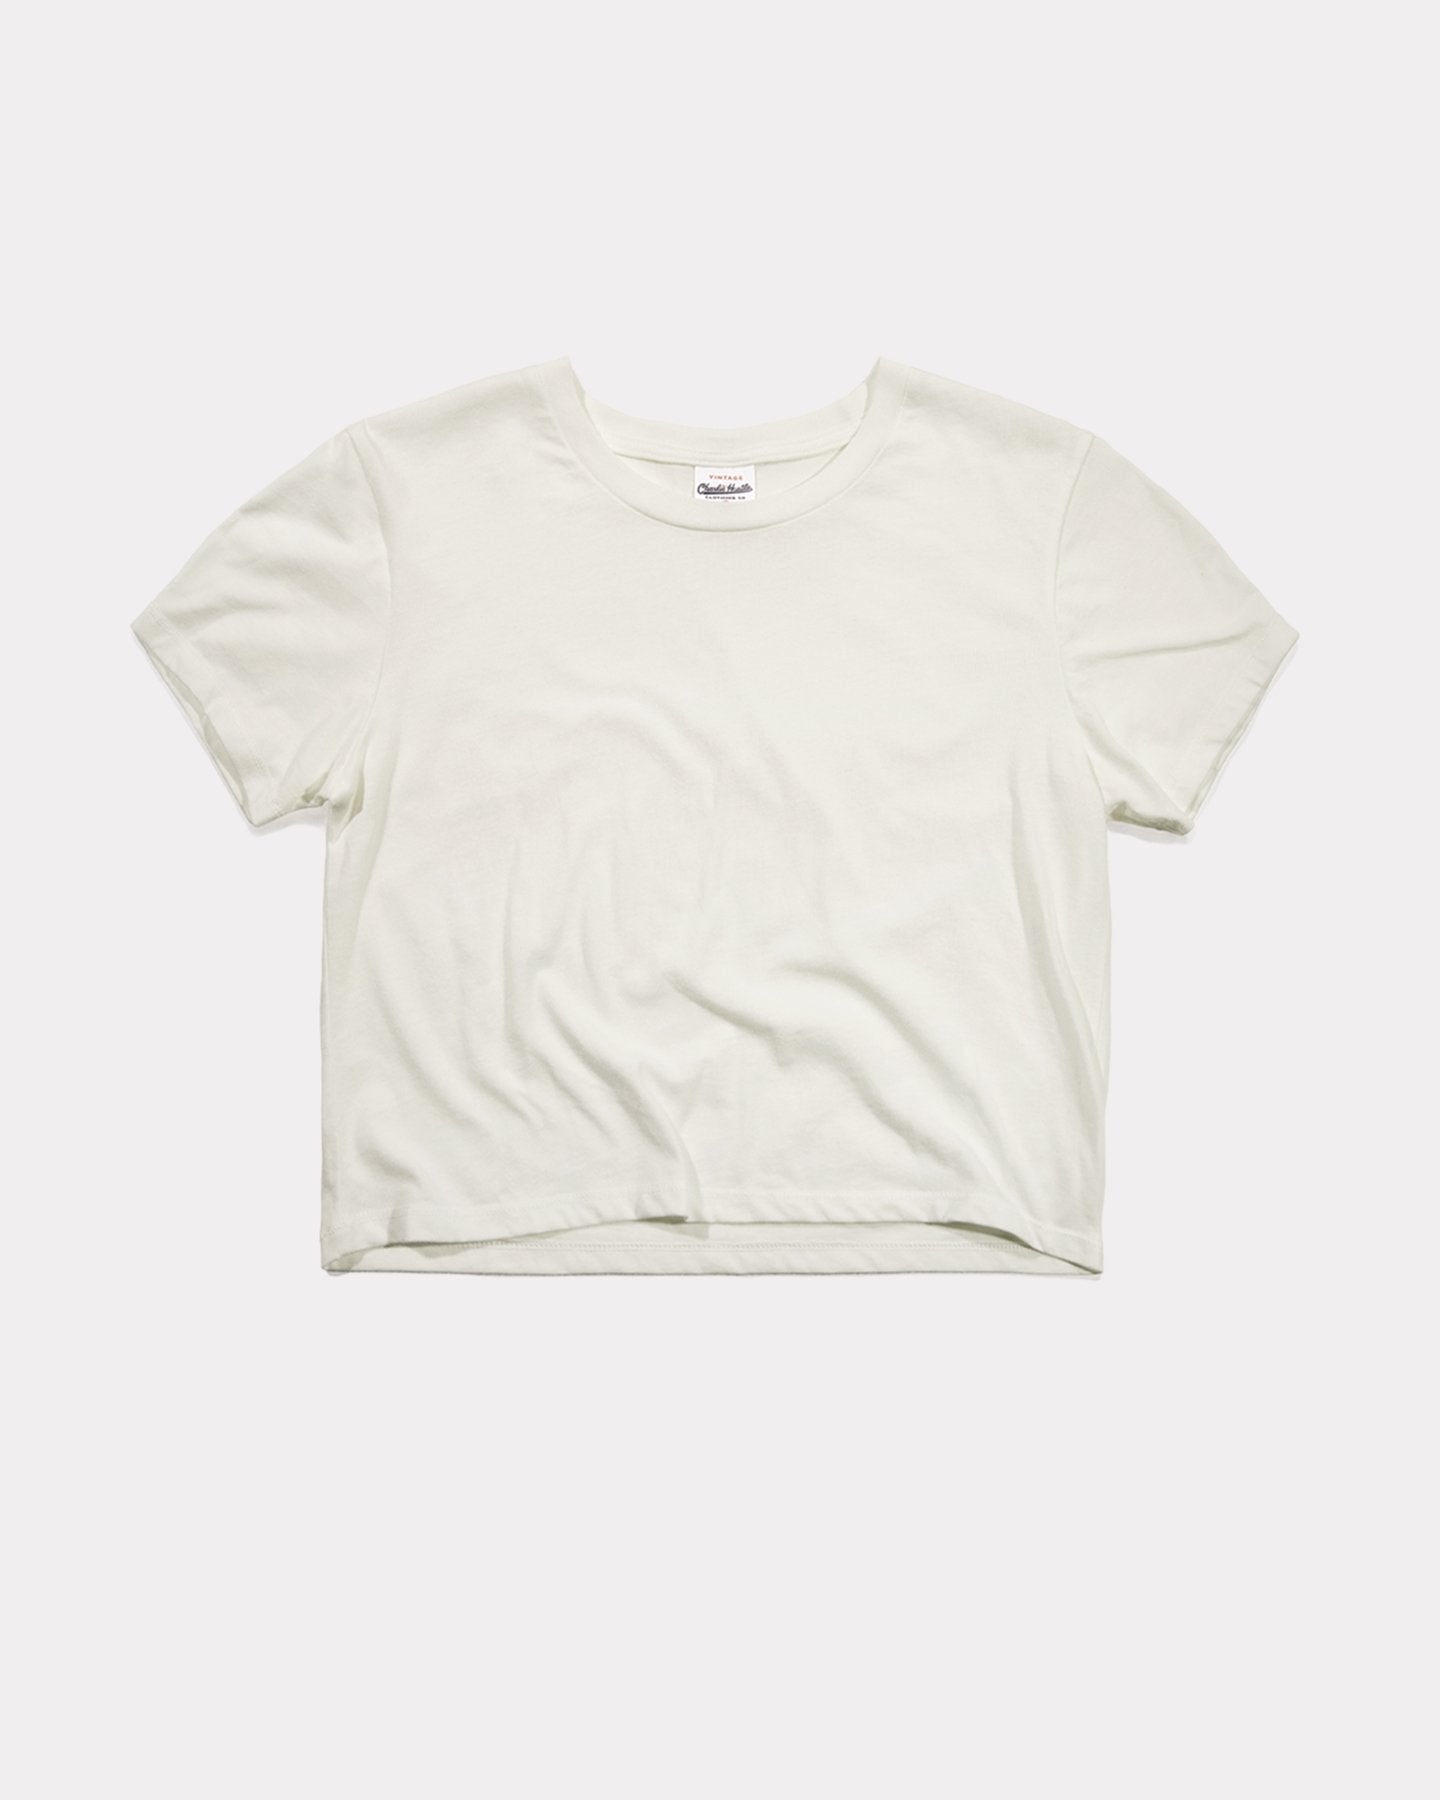 Women\'s Essential Top | White HUSTLE CHARLIE T-Shirt Vintage Crop